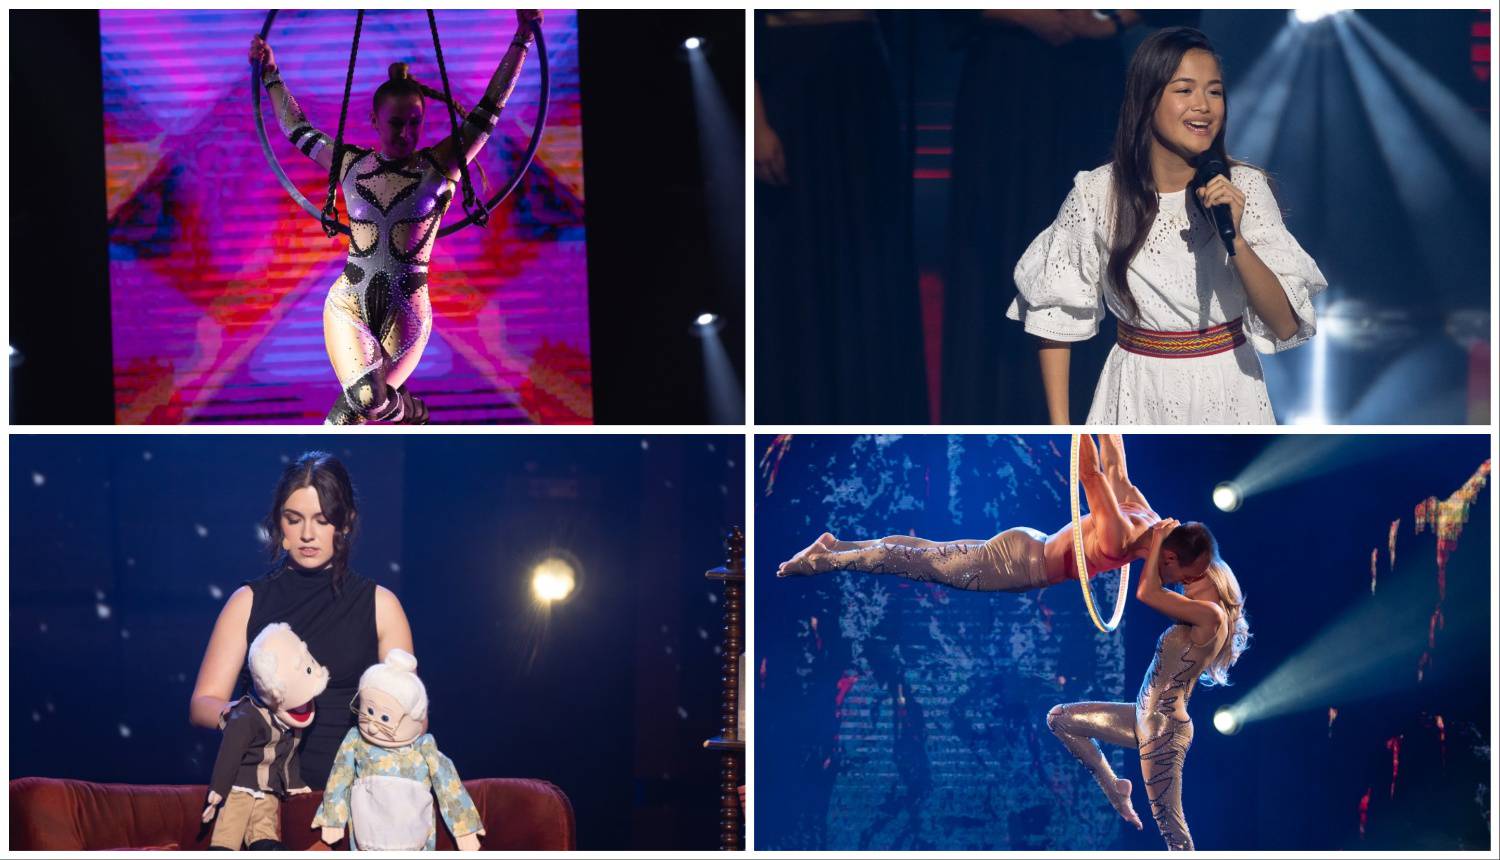 Finale desete jubilarne sezone 'Supertalenta': 12 kandidata se bori za nagradu od 30.000 eura